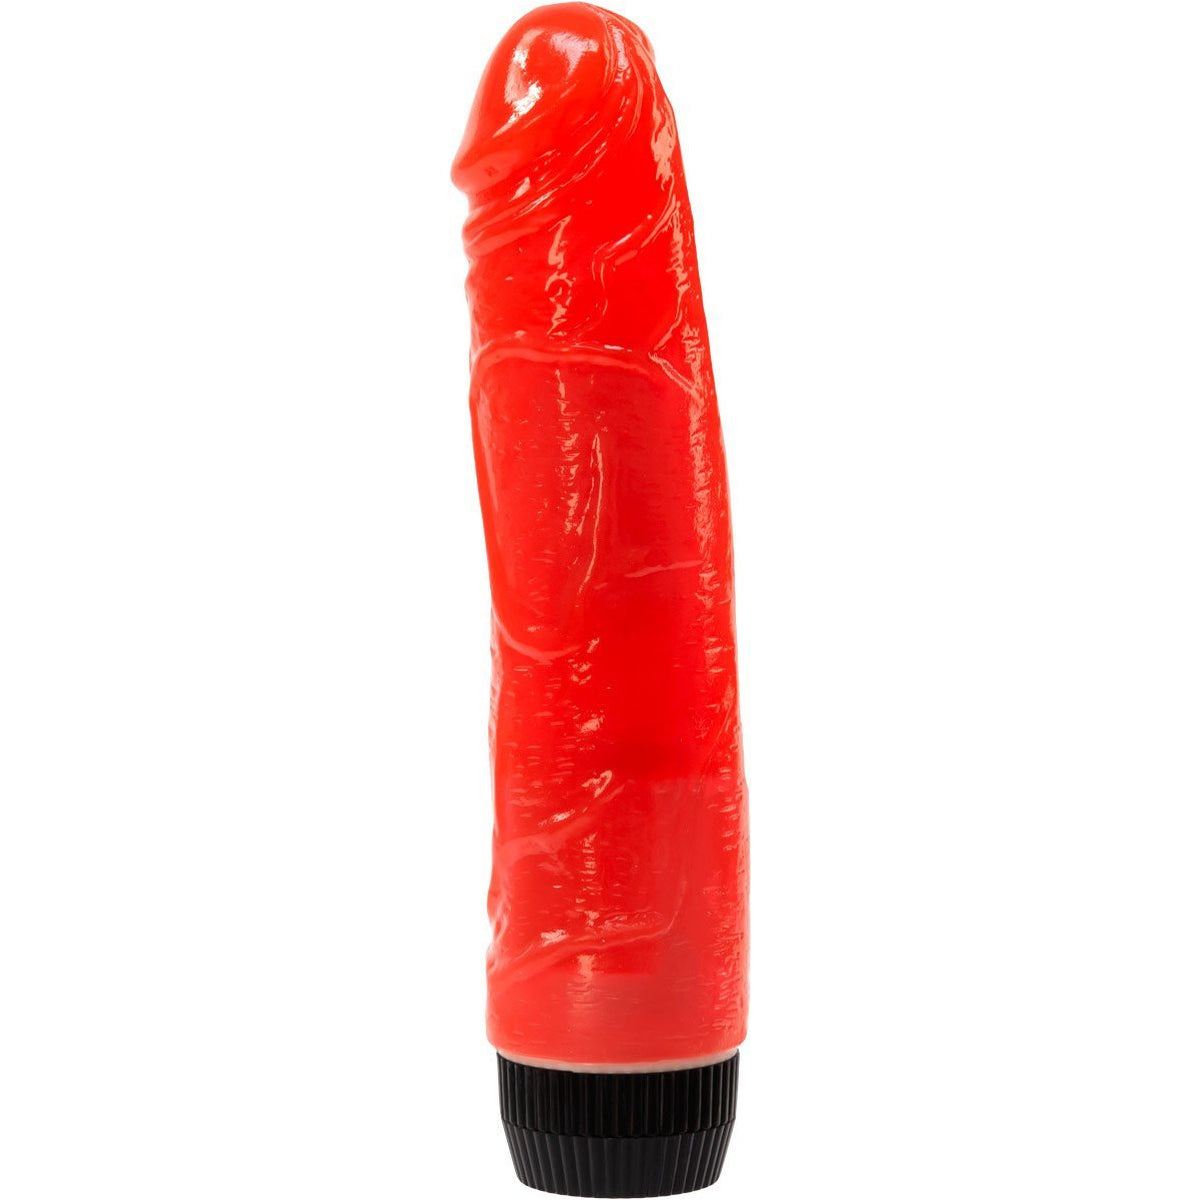 Kinx Osiris - Red Realistic Vibrator - 6&quot;